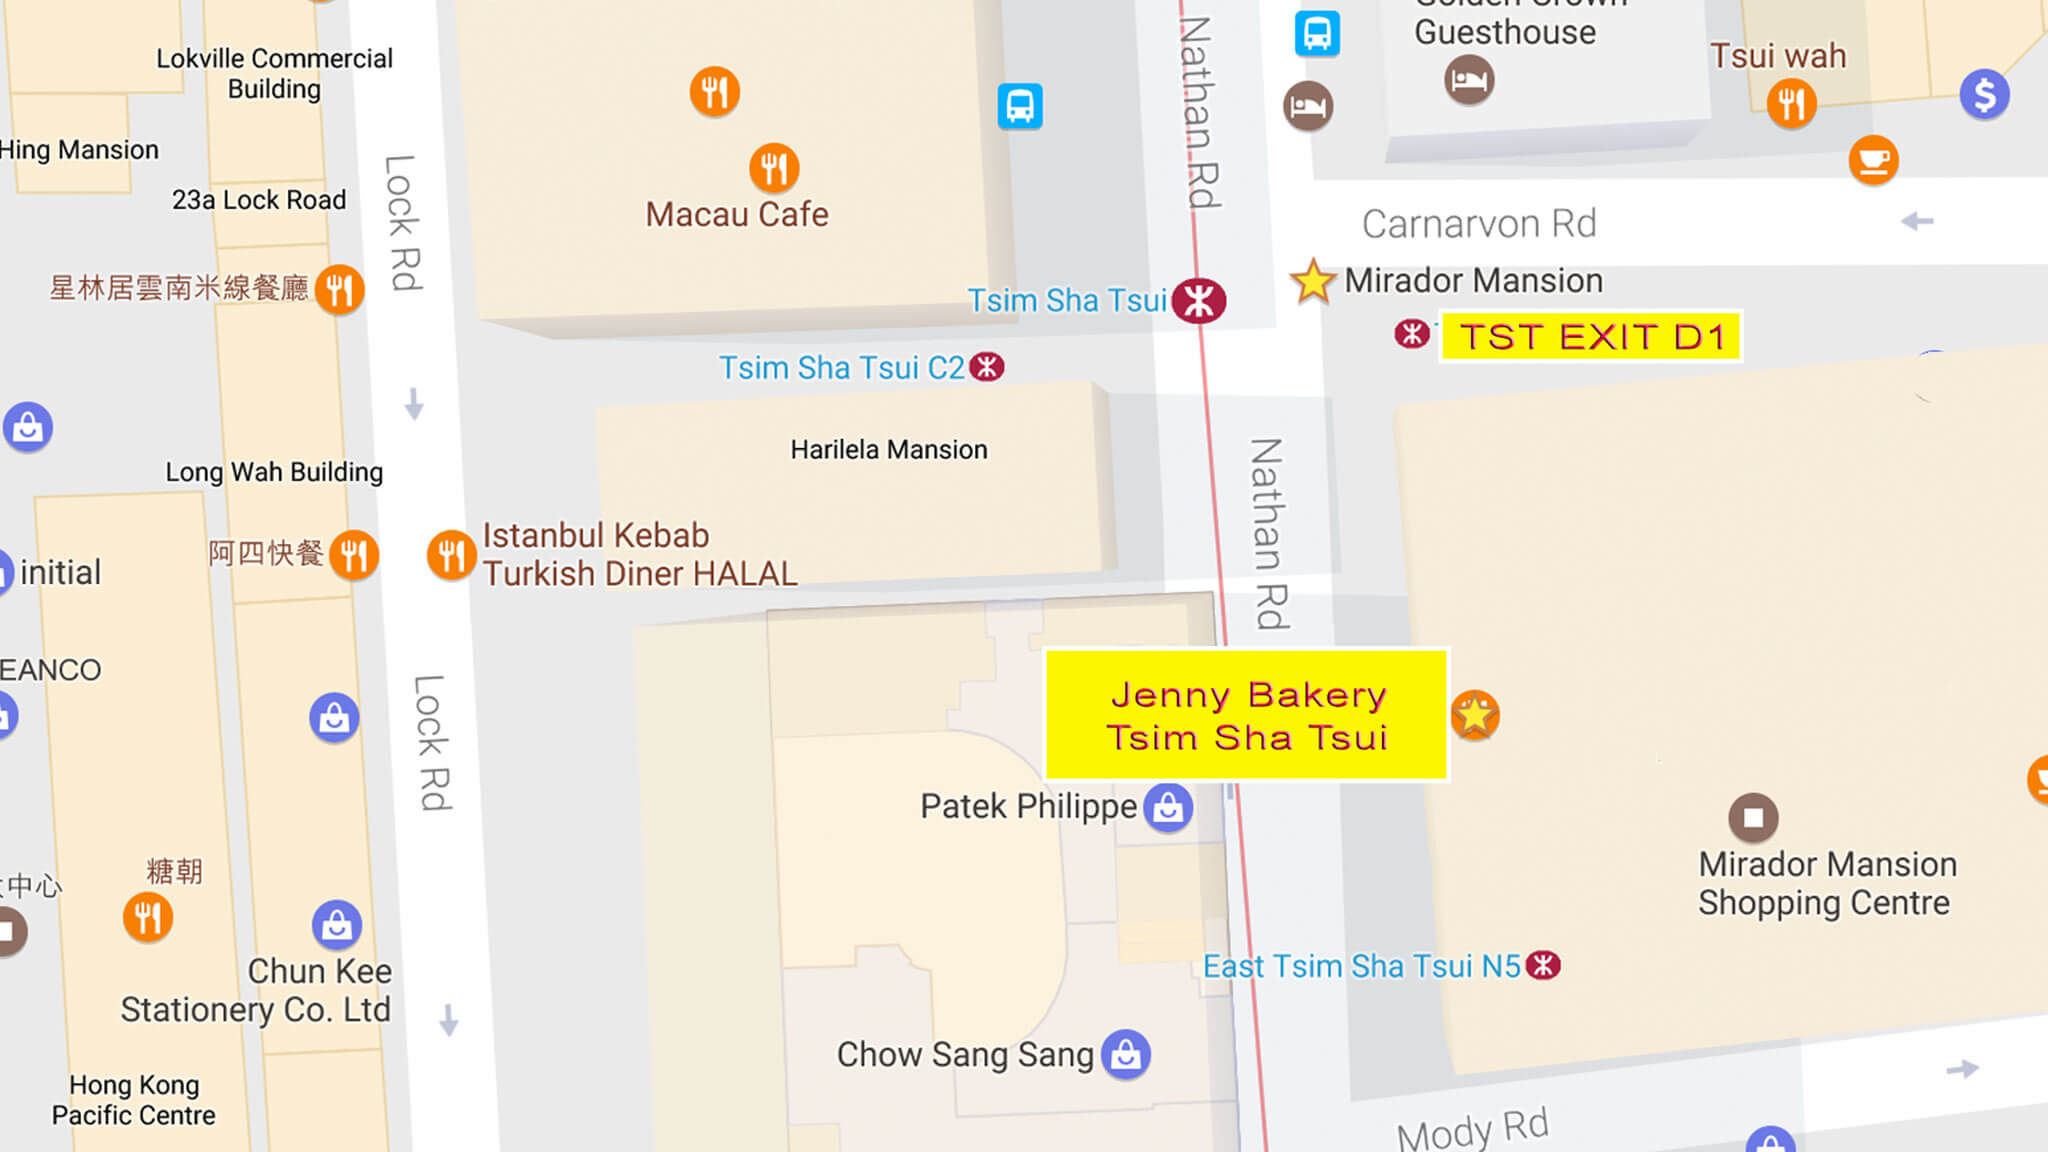 How to go to Jenny Bakery TSIM SHA TSUI (九龍尖沙咀)